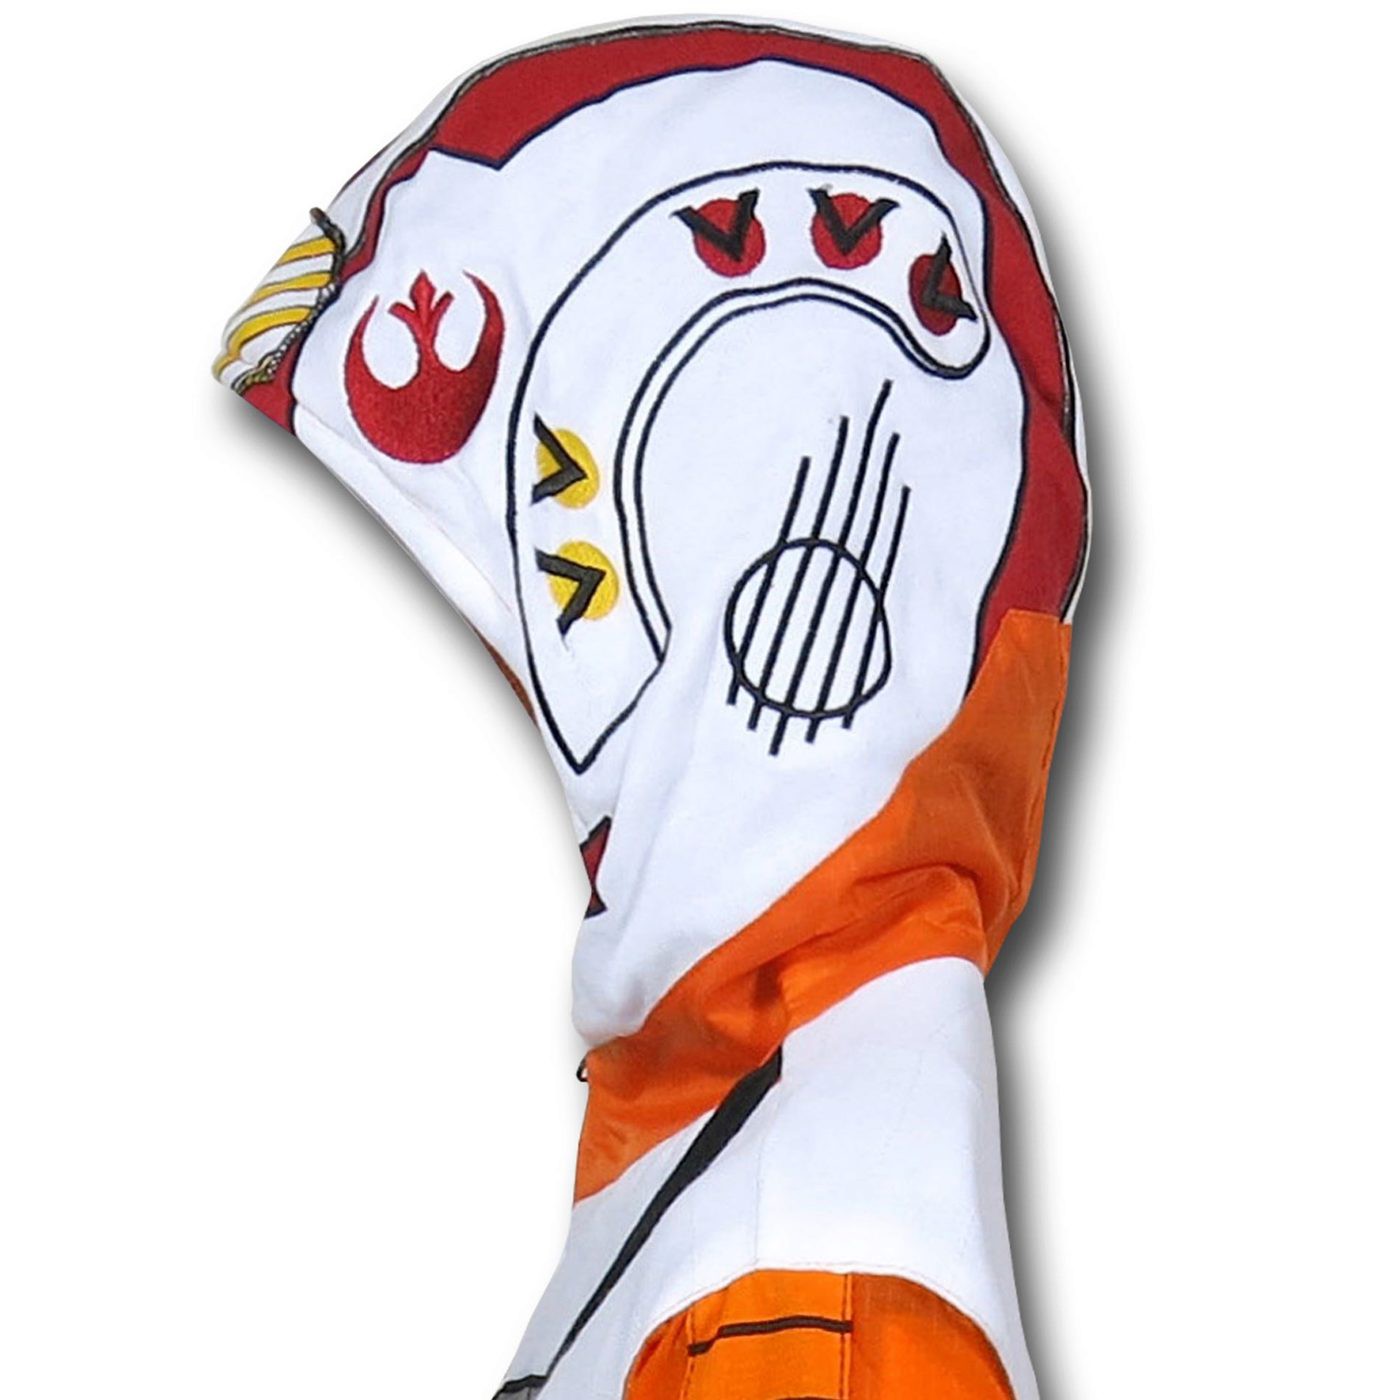 Star Wars Rebel Pilot Masked Costume Hoodie